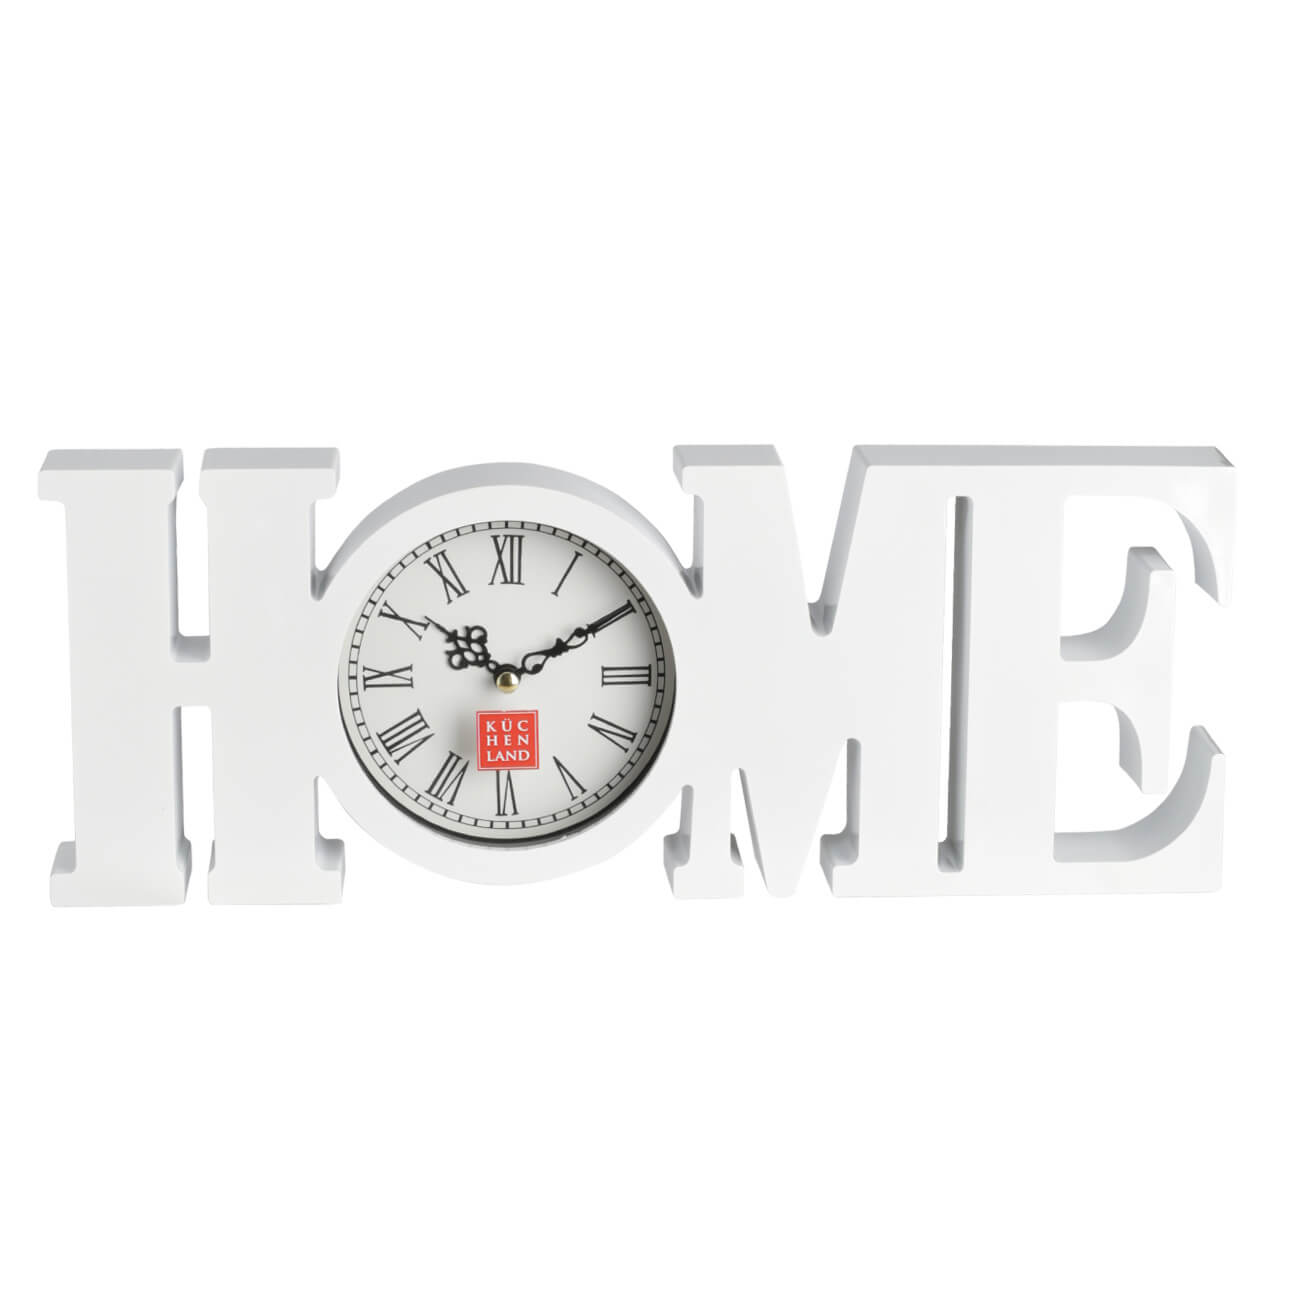 Часы настенные, 39х15 см, пластик/стекло, белые, Ноmе, Home deco настенные часы метеостанция rst 77746